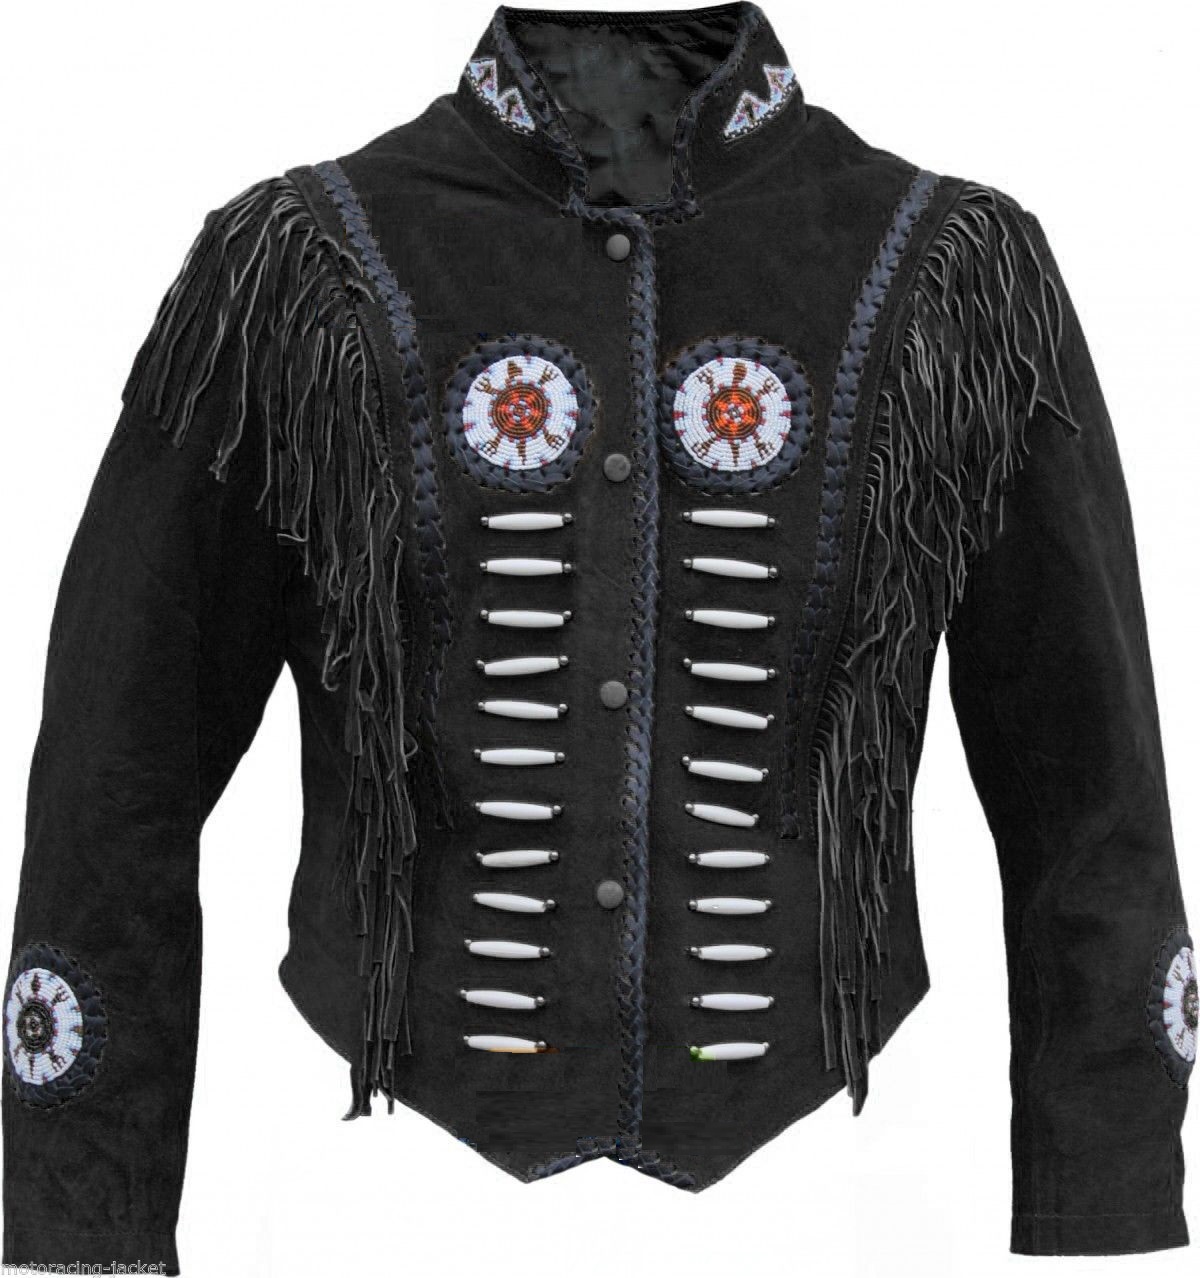 Men's Native American Buckskin Black Suede Leather Western Fringes Beaded Jacket Fj21